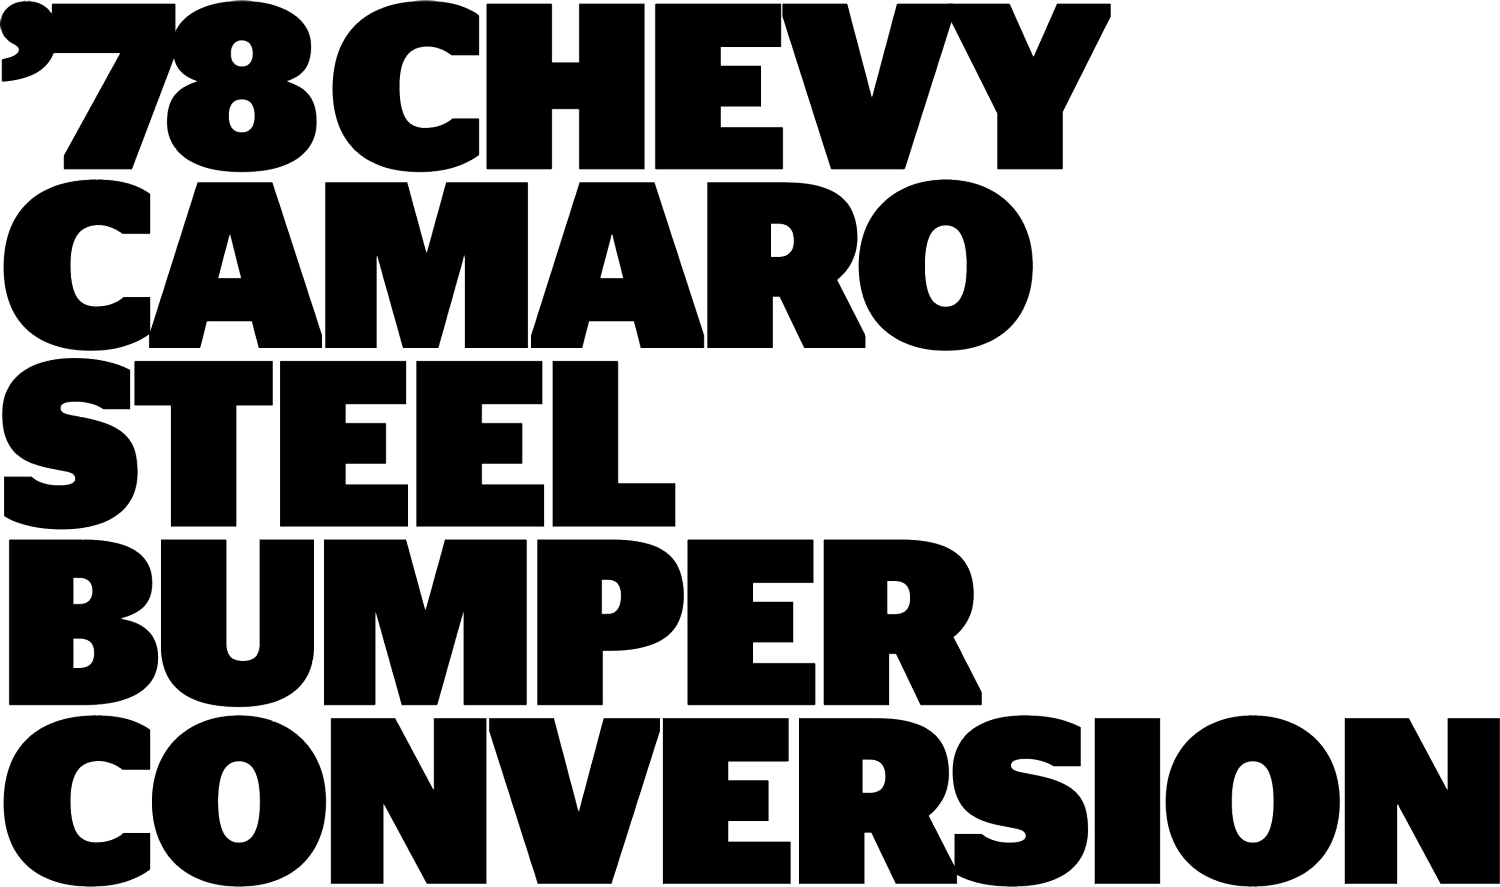 ’78 Chevy Camaro Steel Bumper Conversion Title